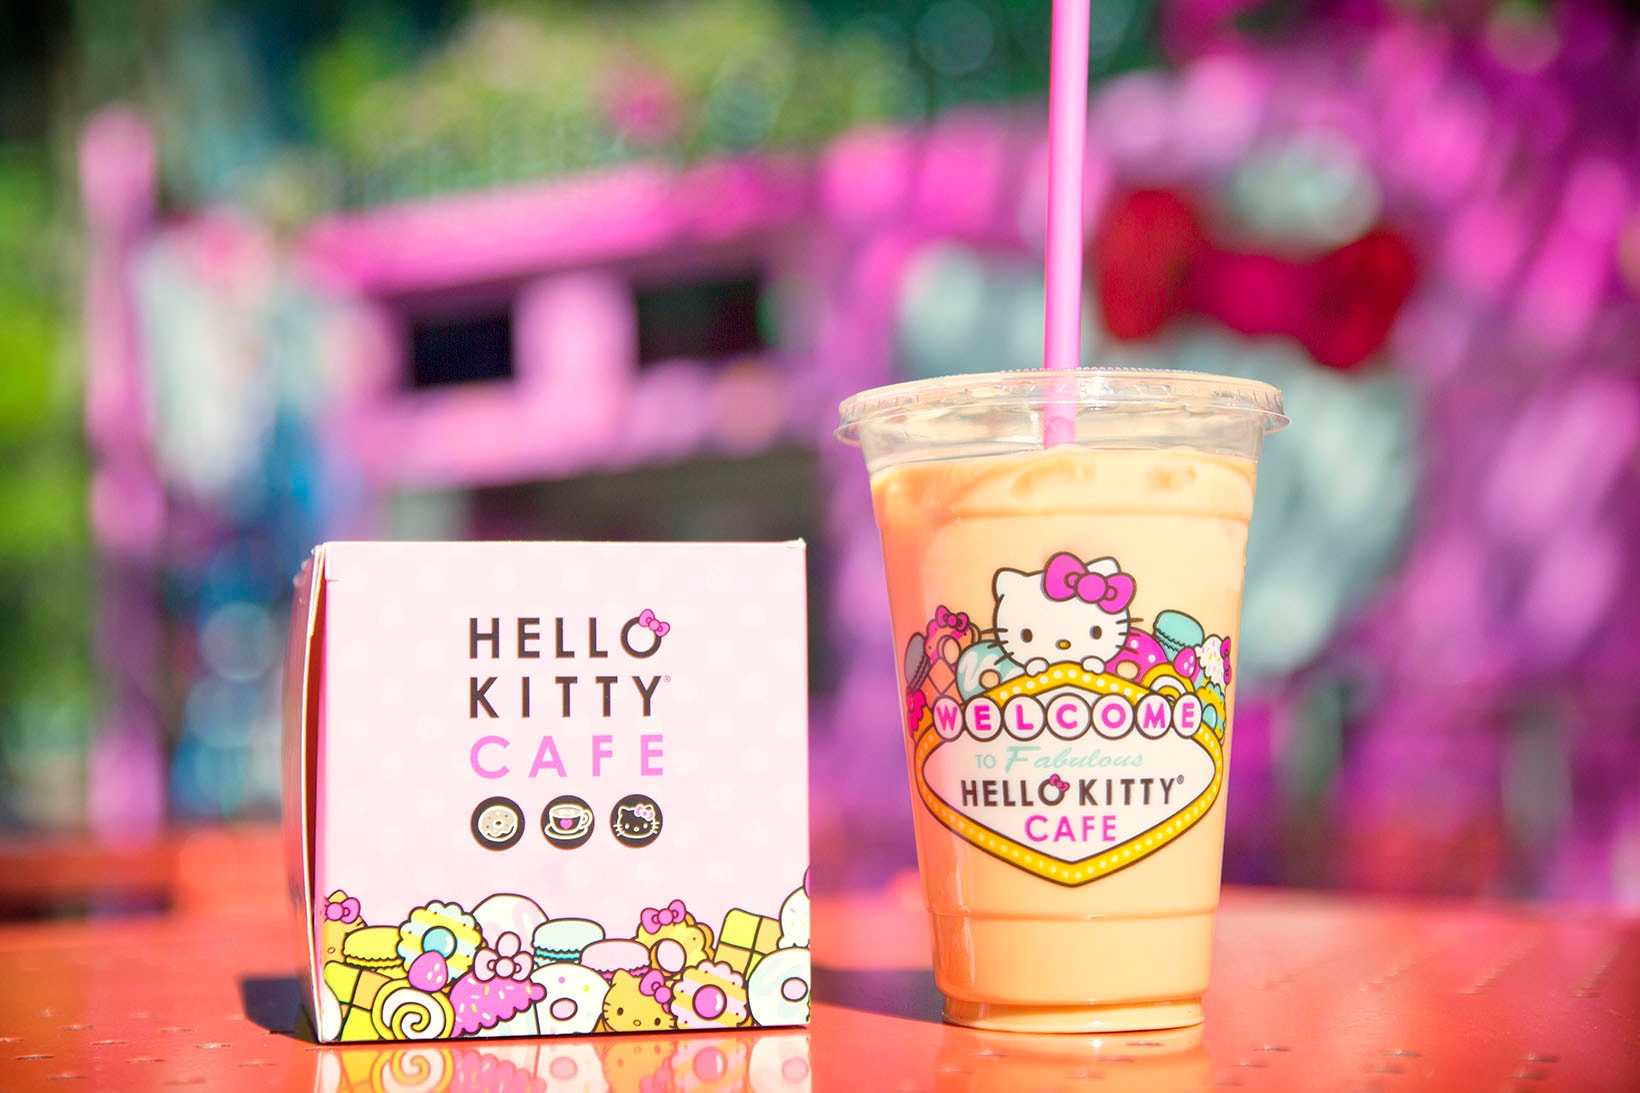 Hello Kitty Cafe The Park Las Vegas Opening Hours Date Sanrio Cookies Tea Coffee Lemonade Donuts Cakes Gudetama Keroppi